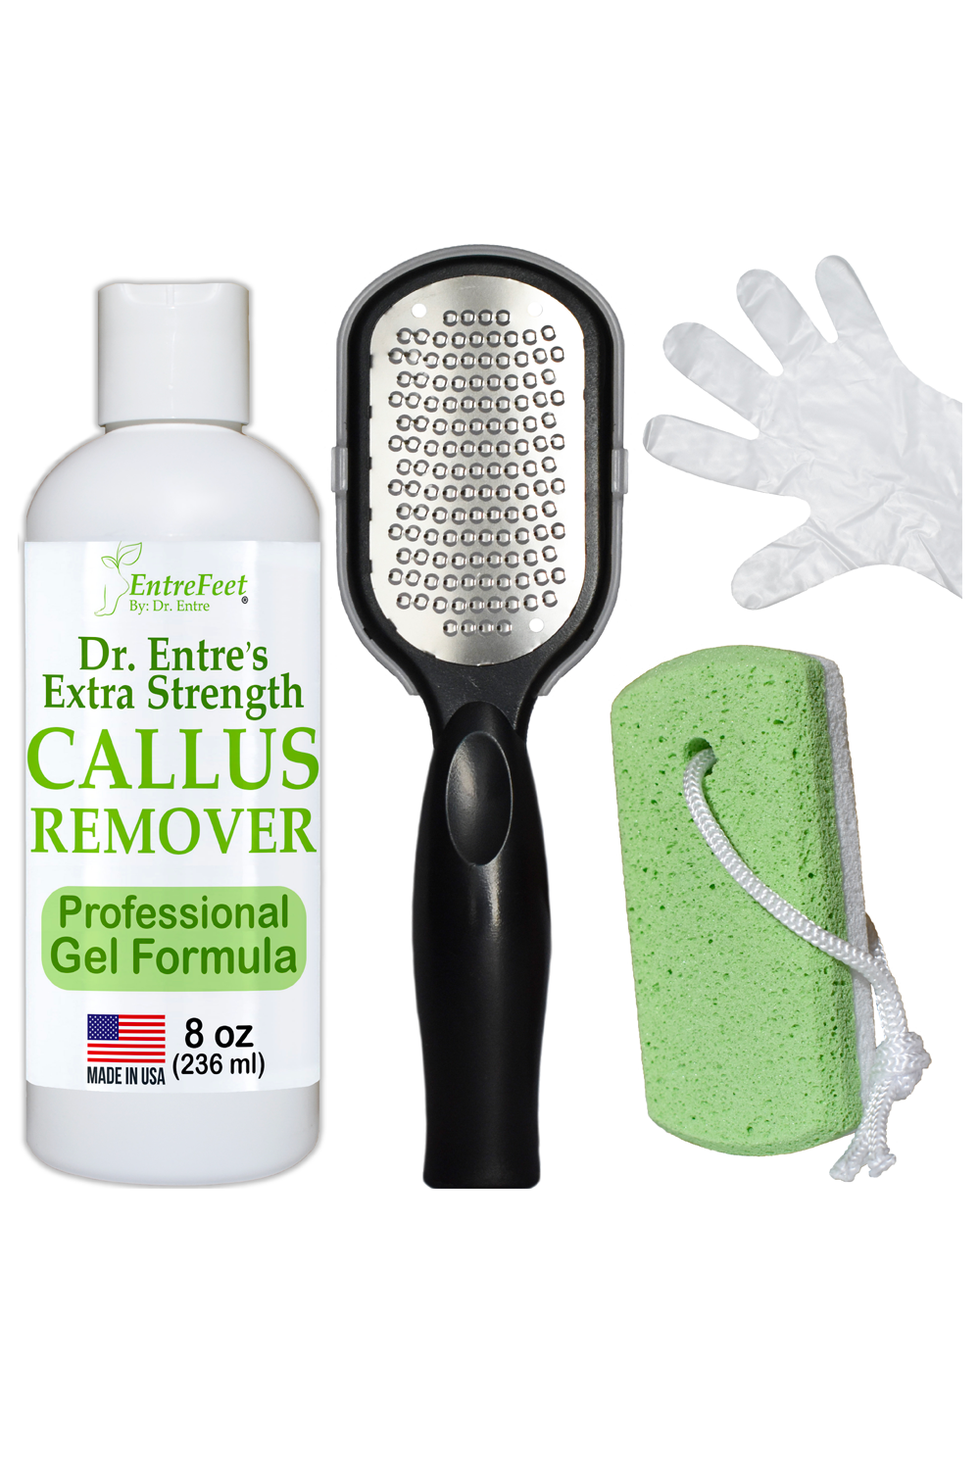 EntreFeet Dr. Entre's Callus Remover Kit